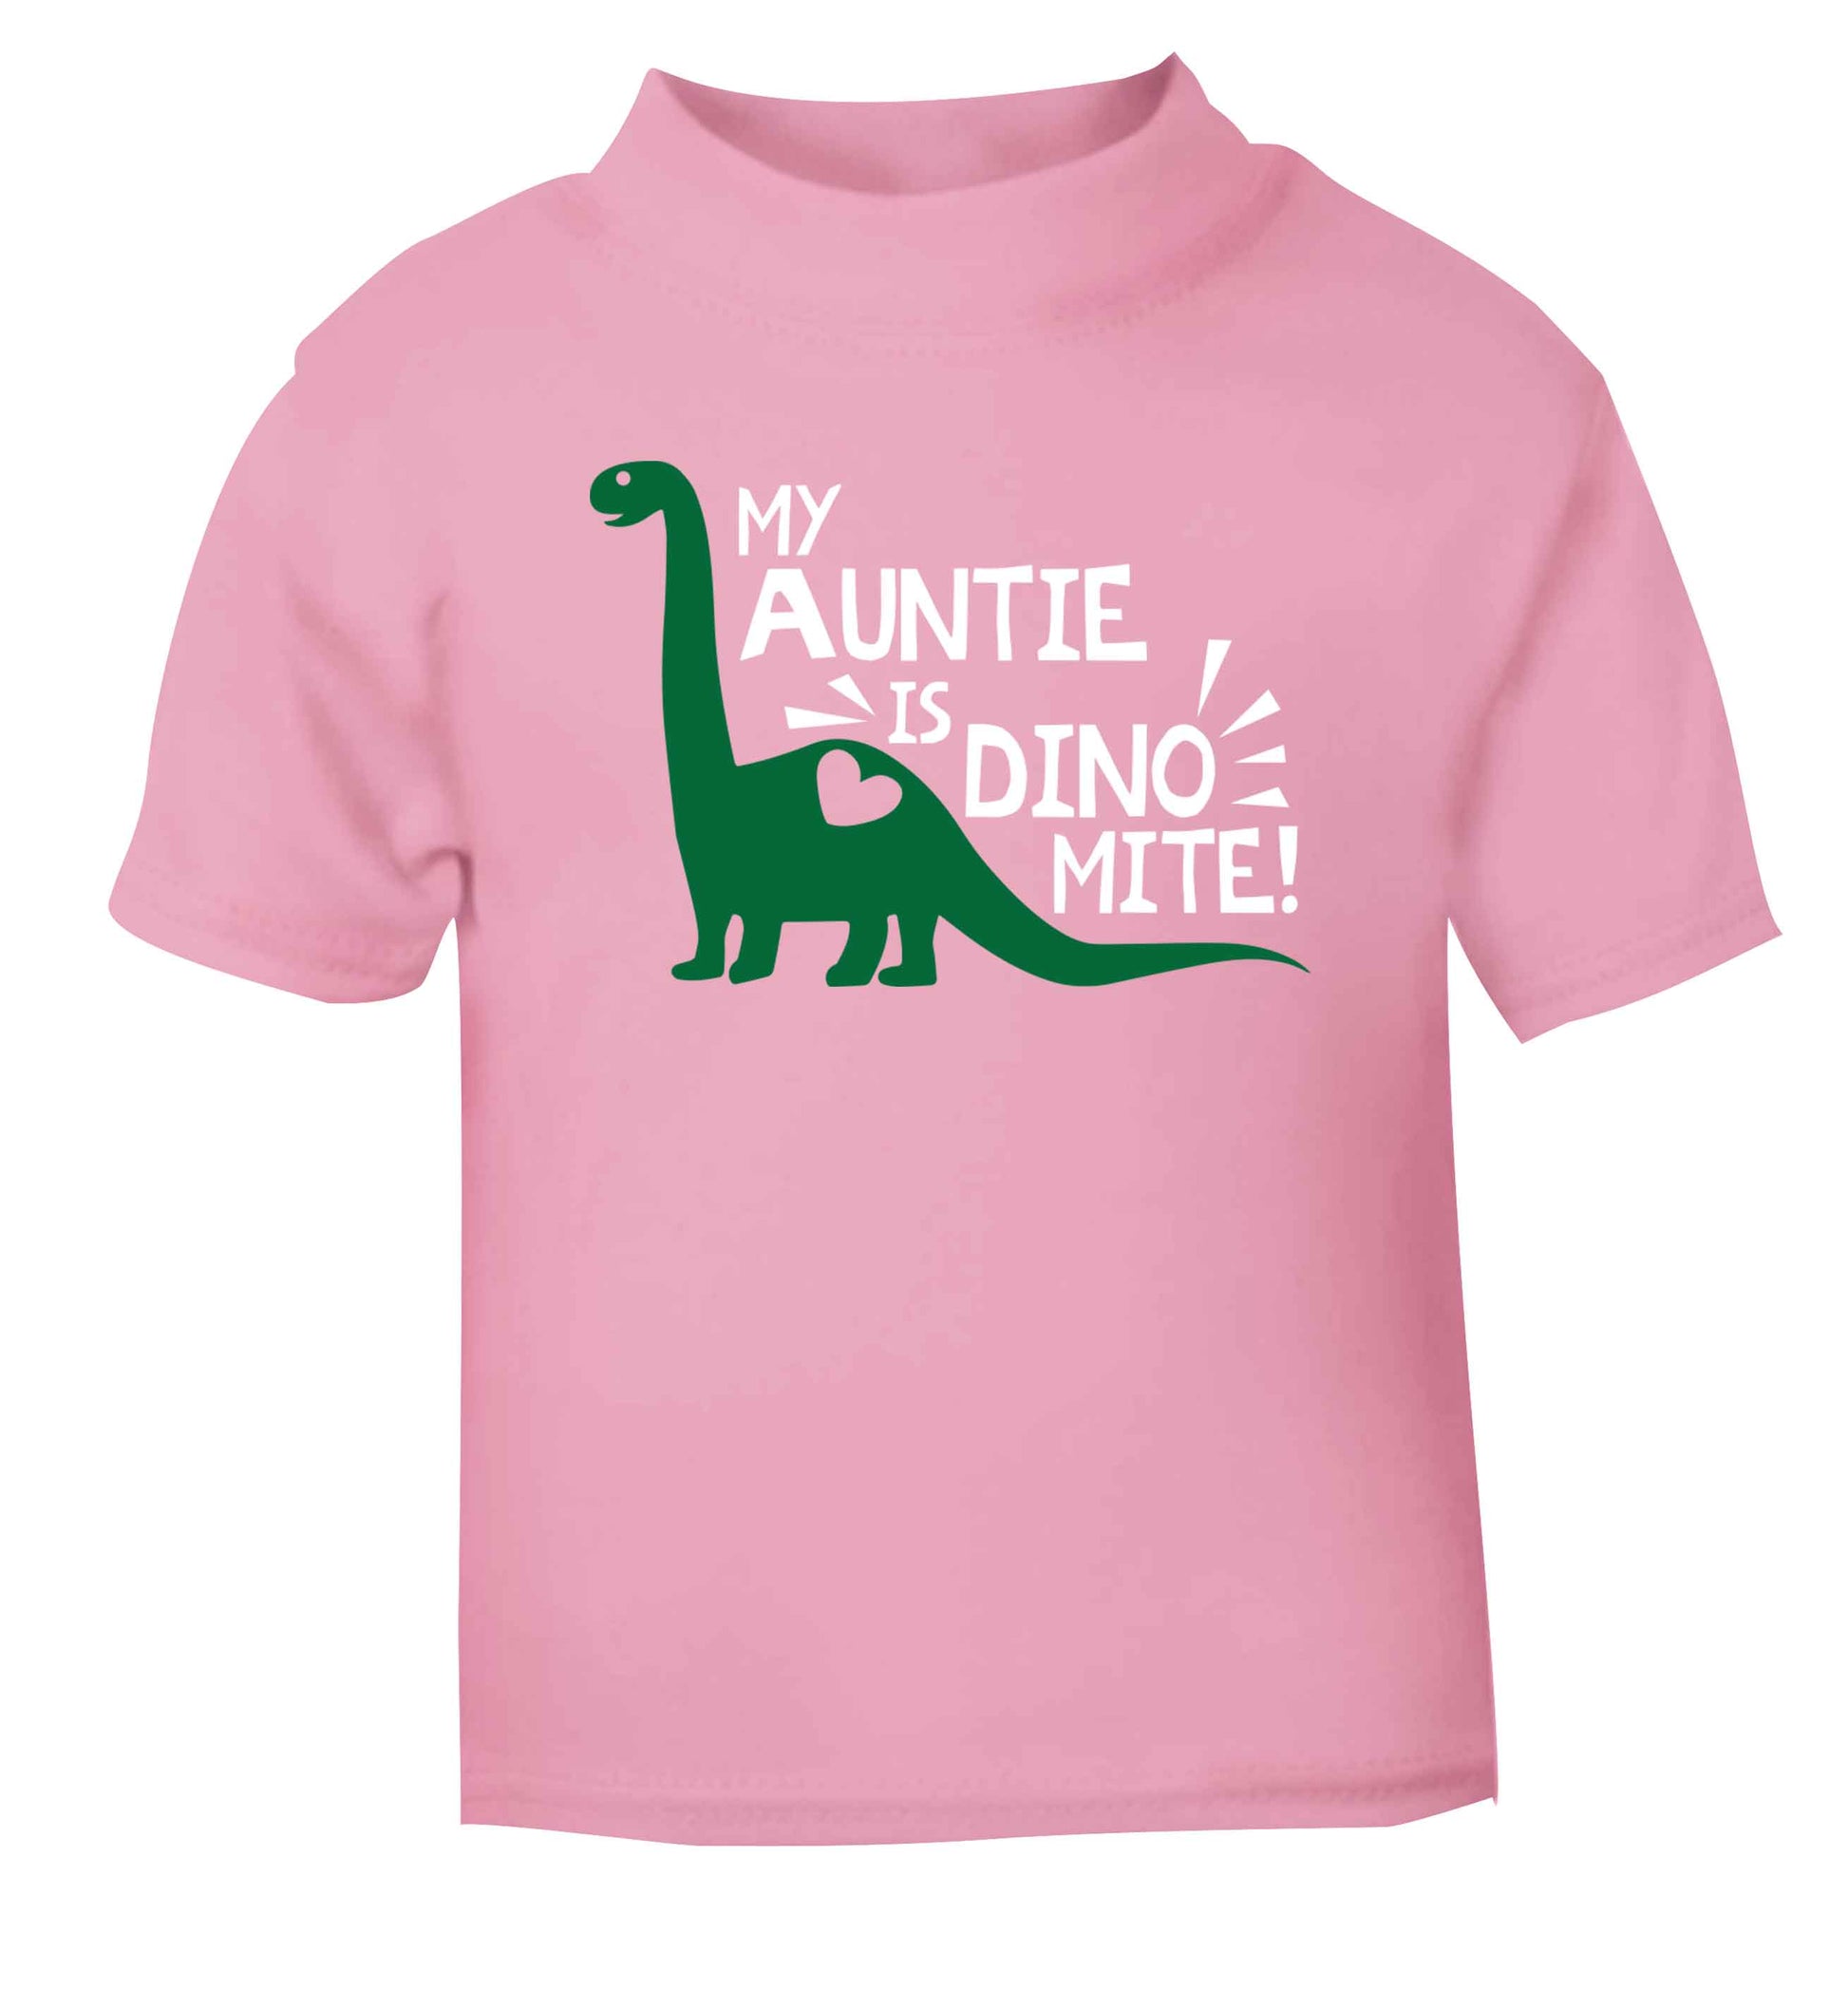 My auntie is dinomite! light pink Baby Toddler Tshirt 2 Years